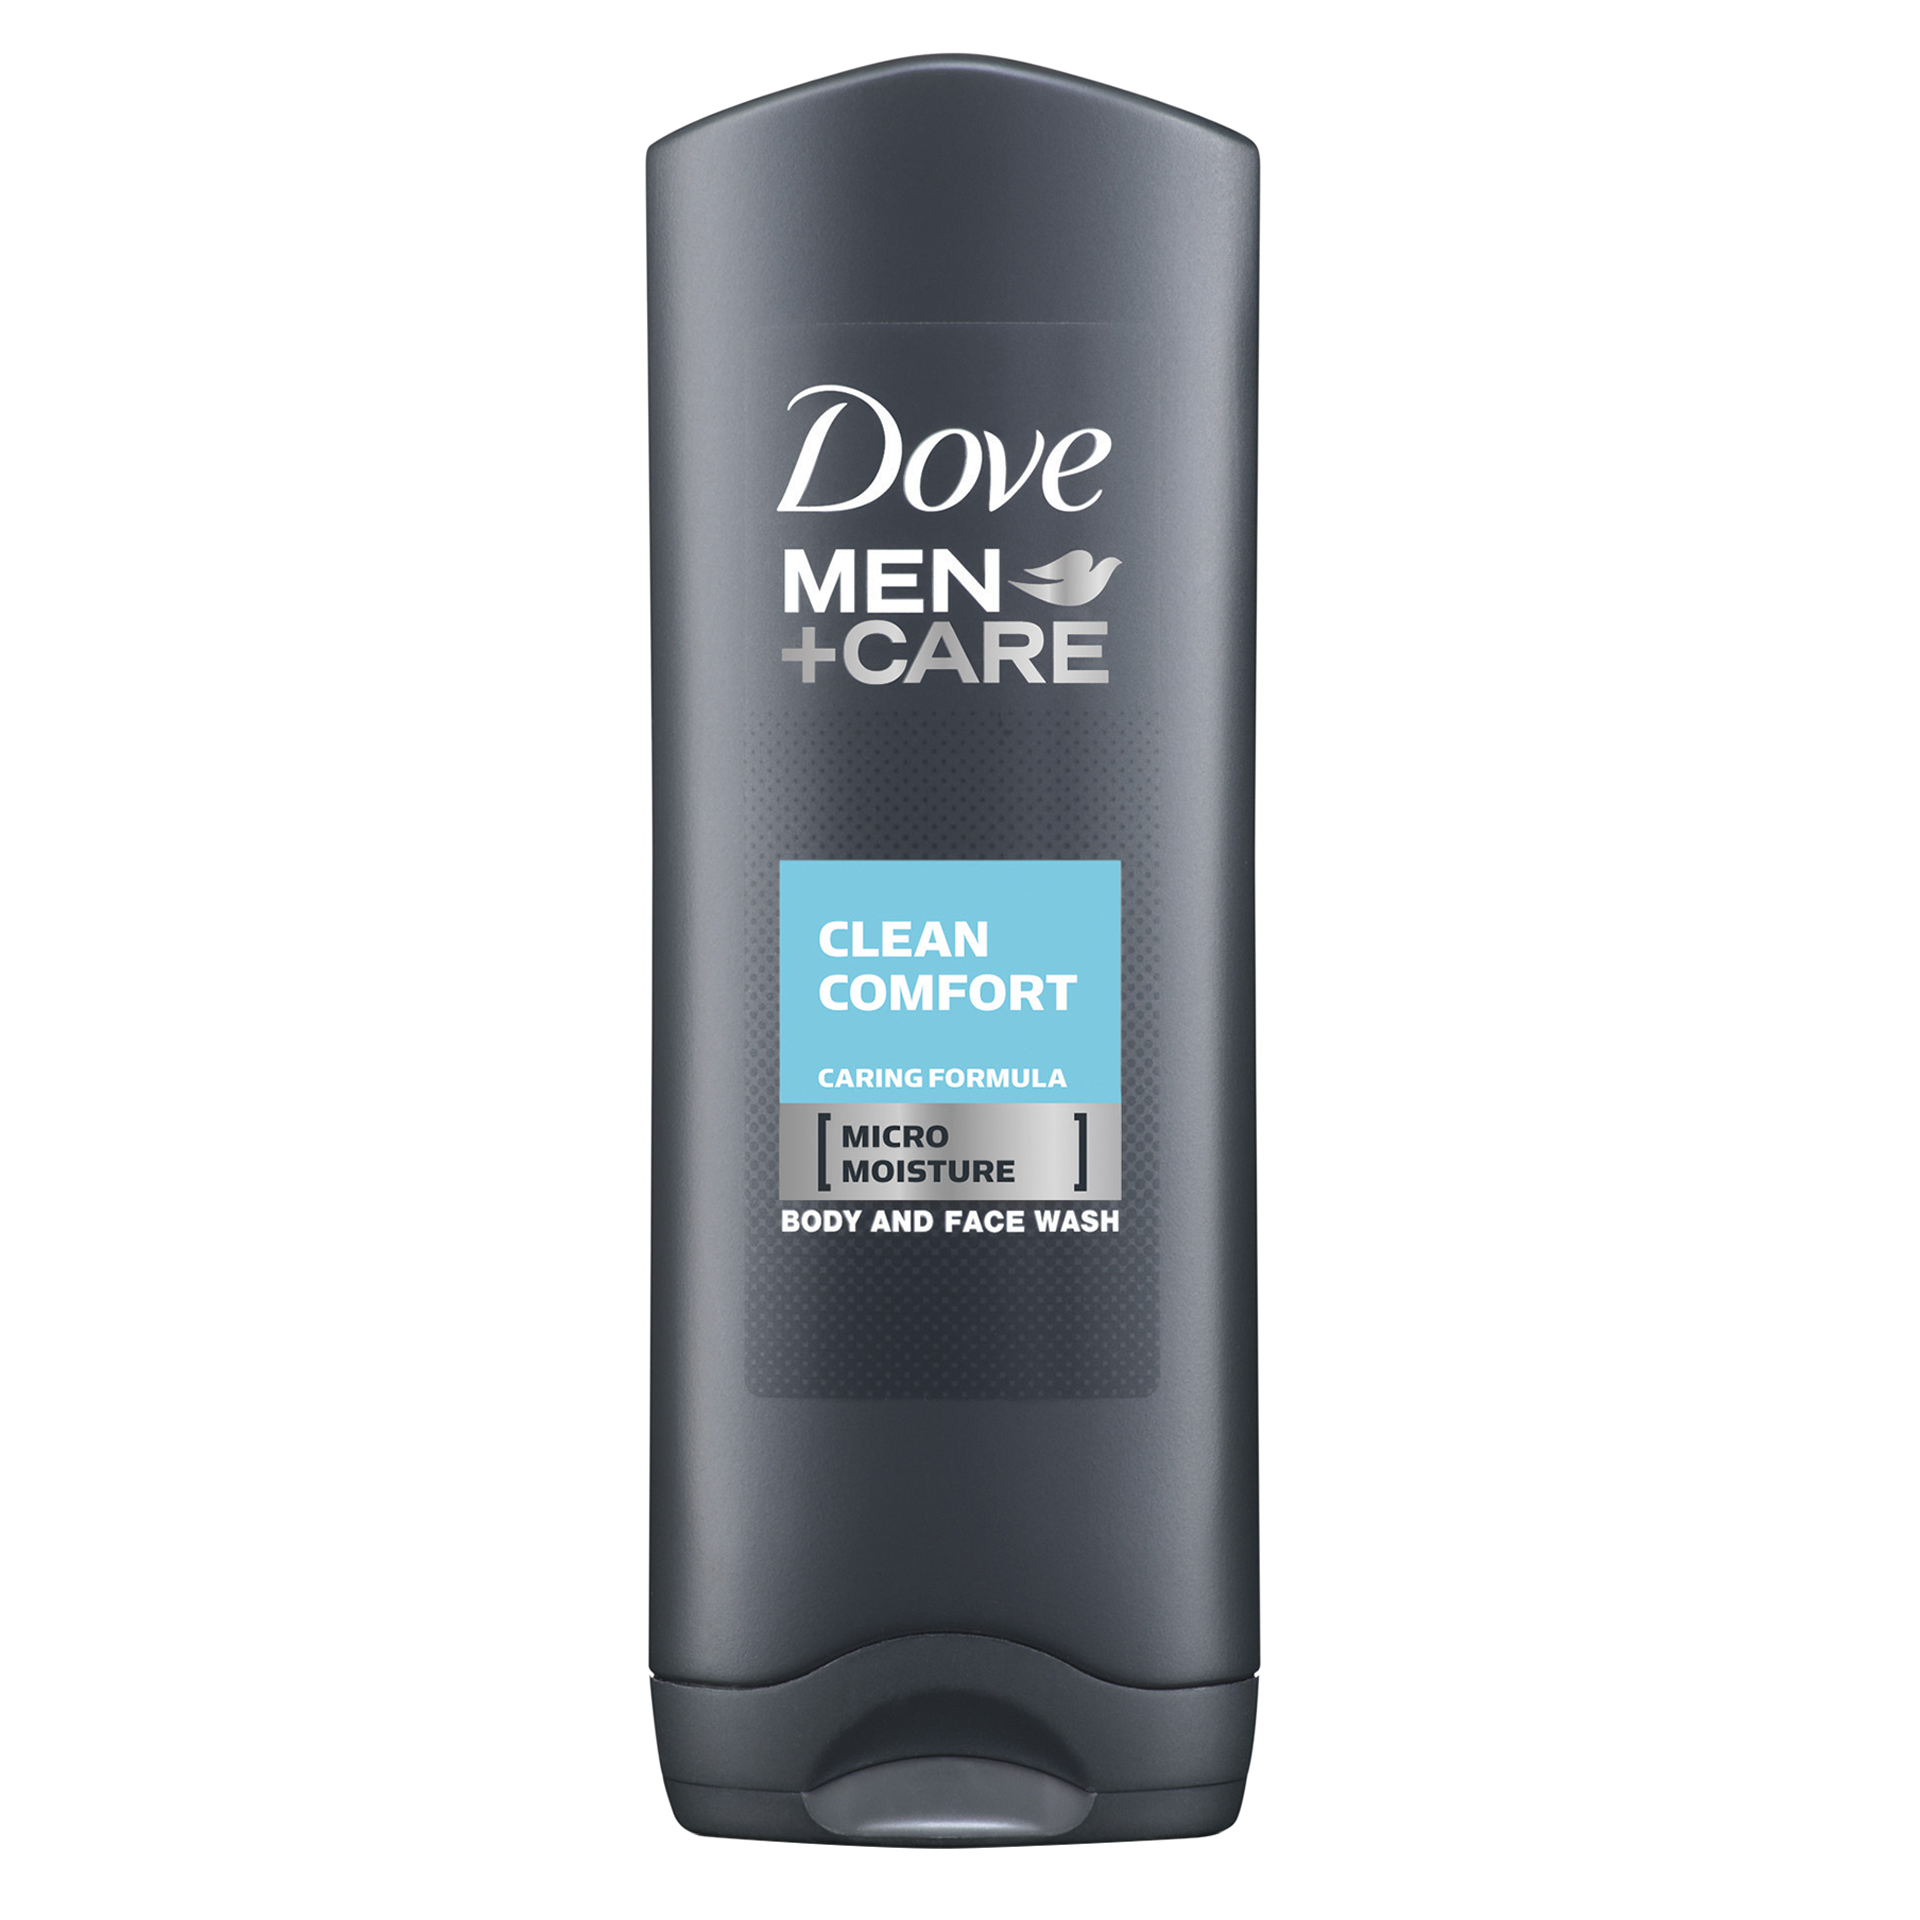 Dove Men+Care Hair Care